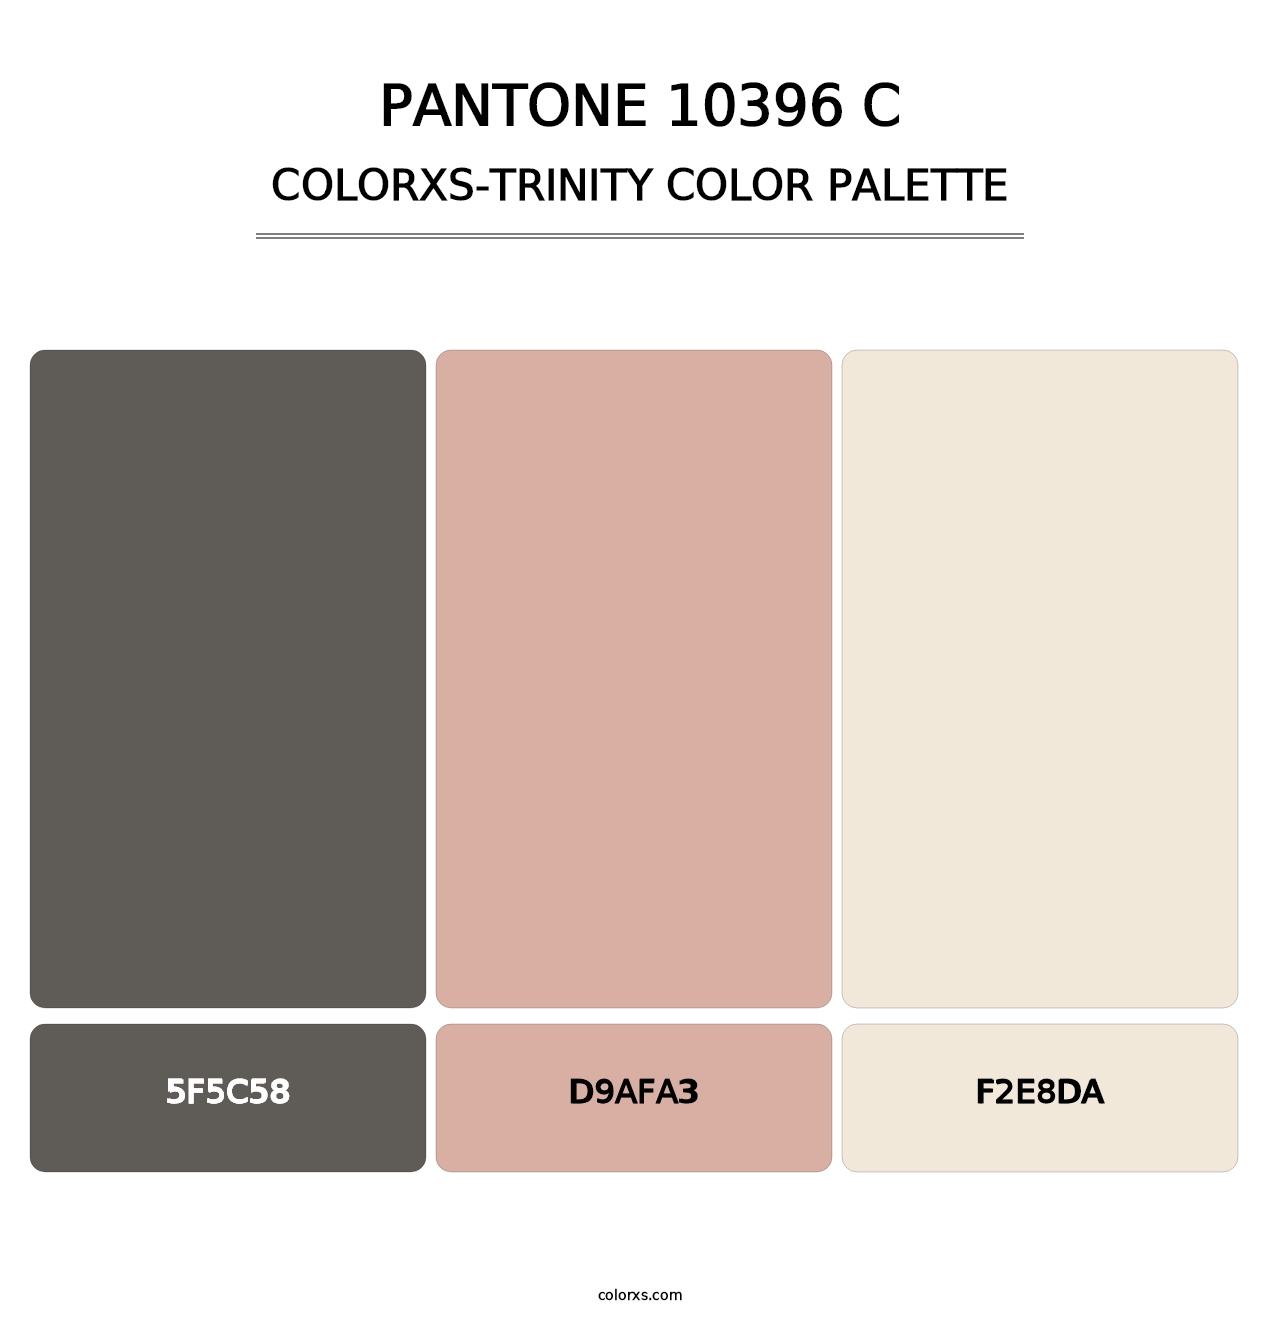 PANTONE 10396 C - Colorxs Trinity Palette